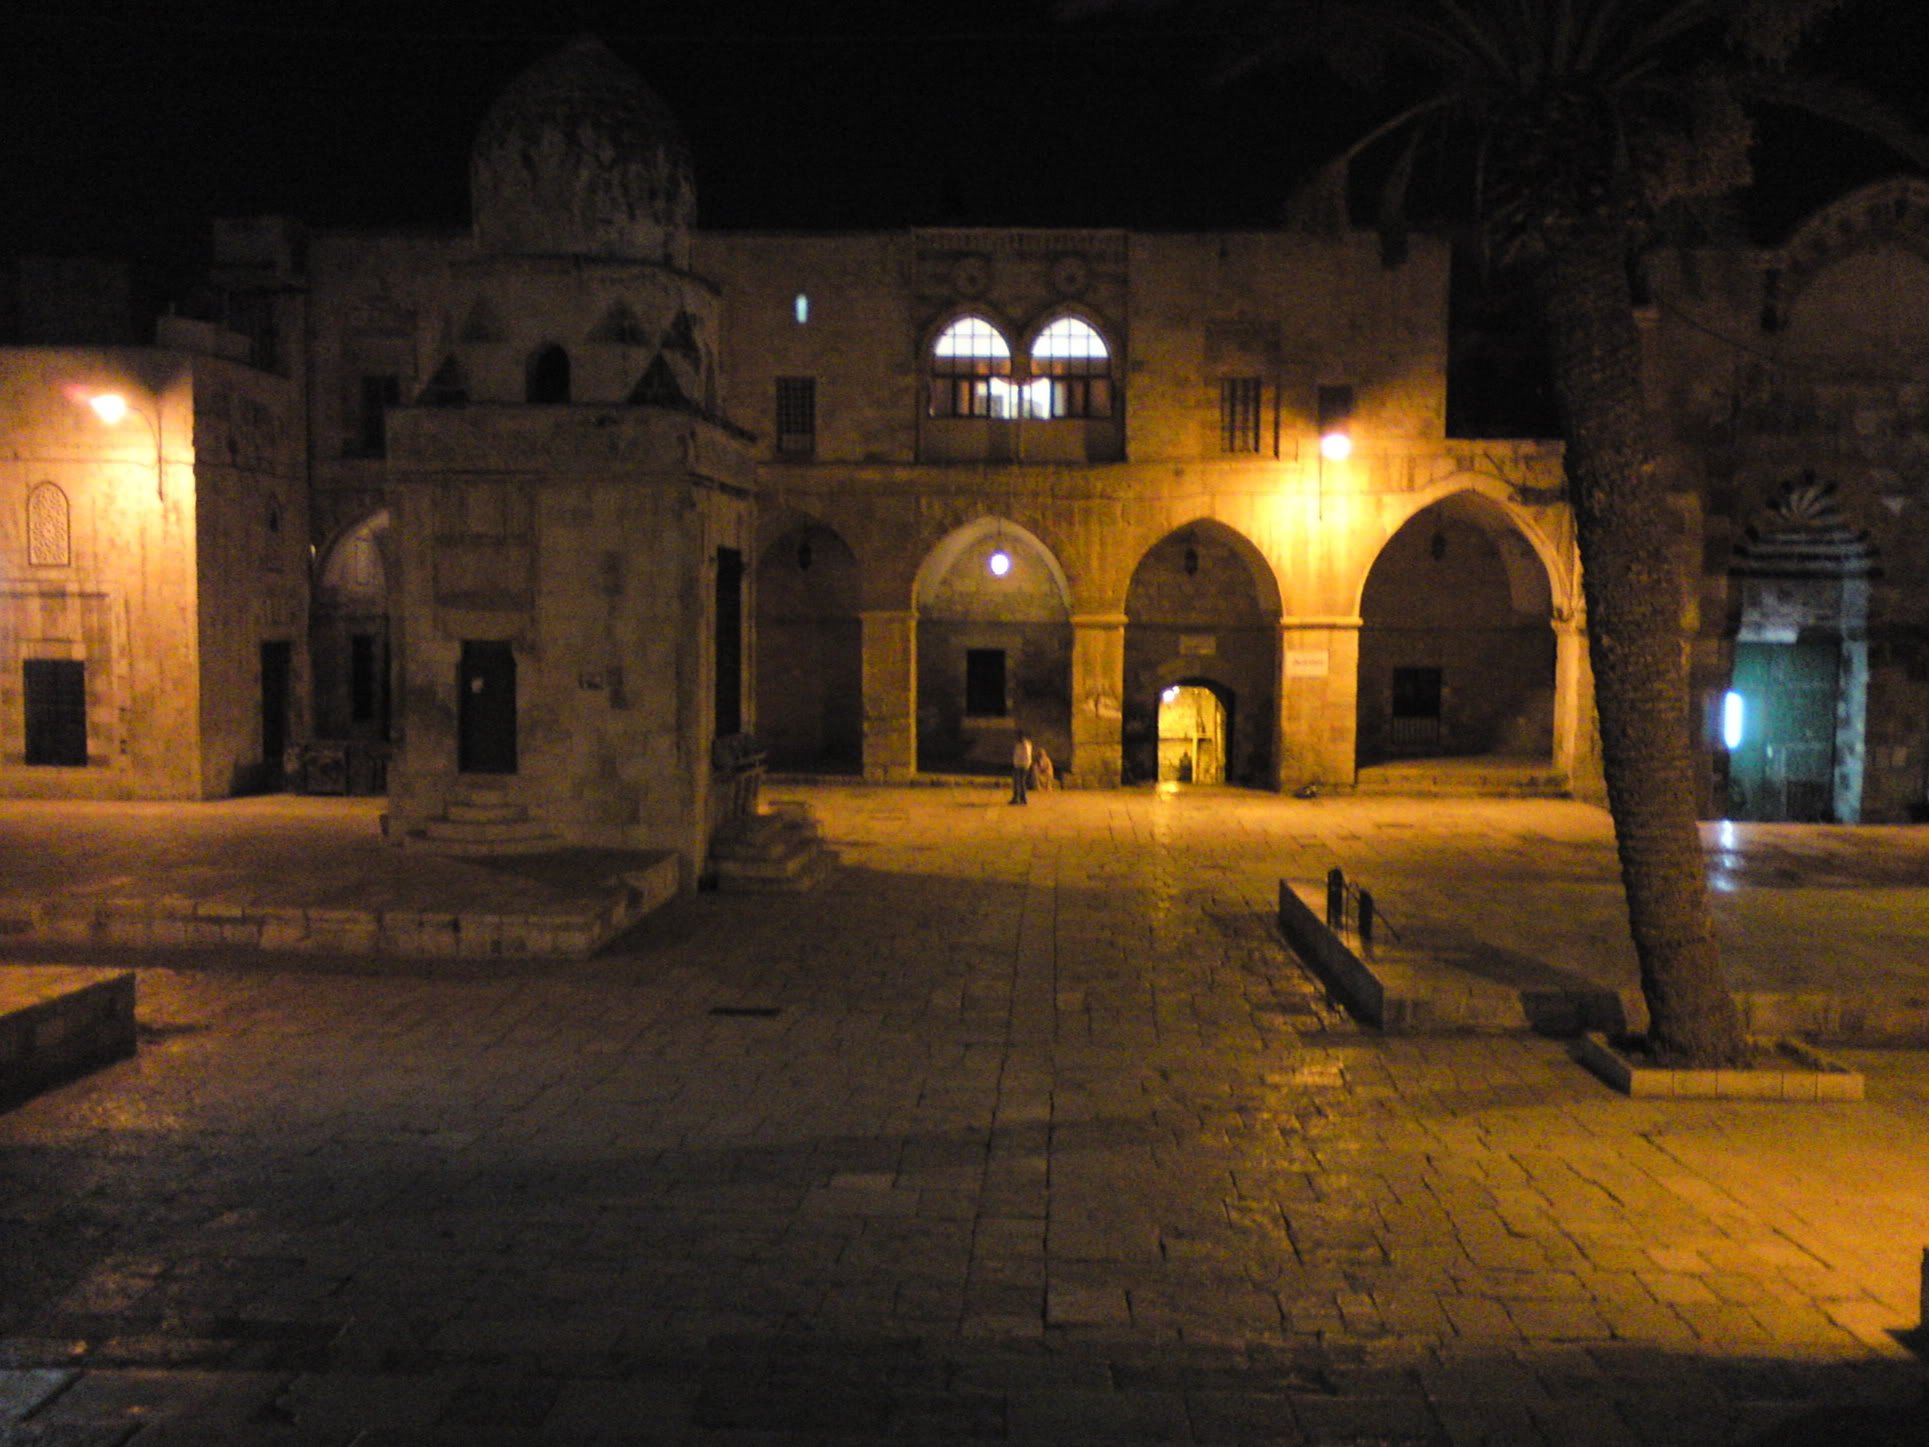 DSC00089 1 - my trip to Al-Aqsa